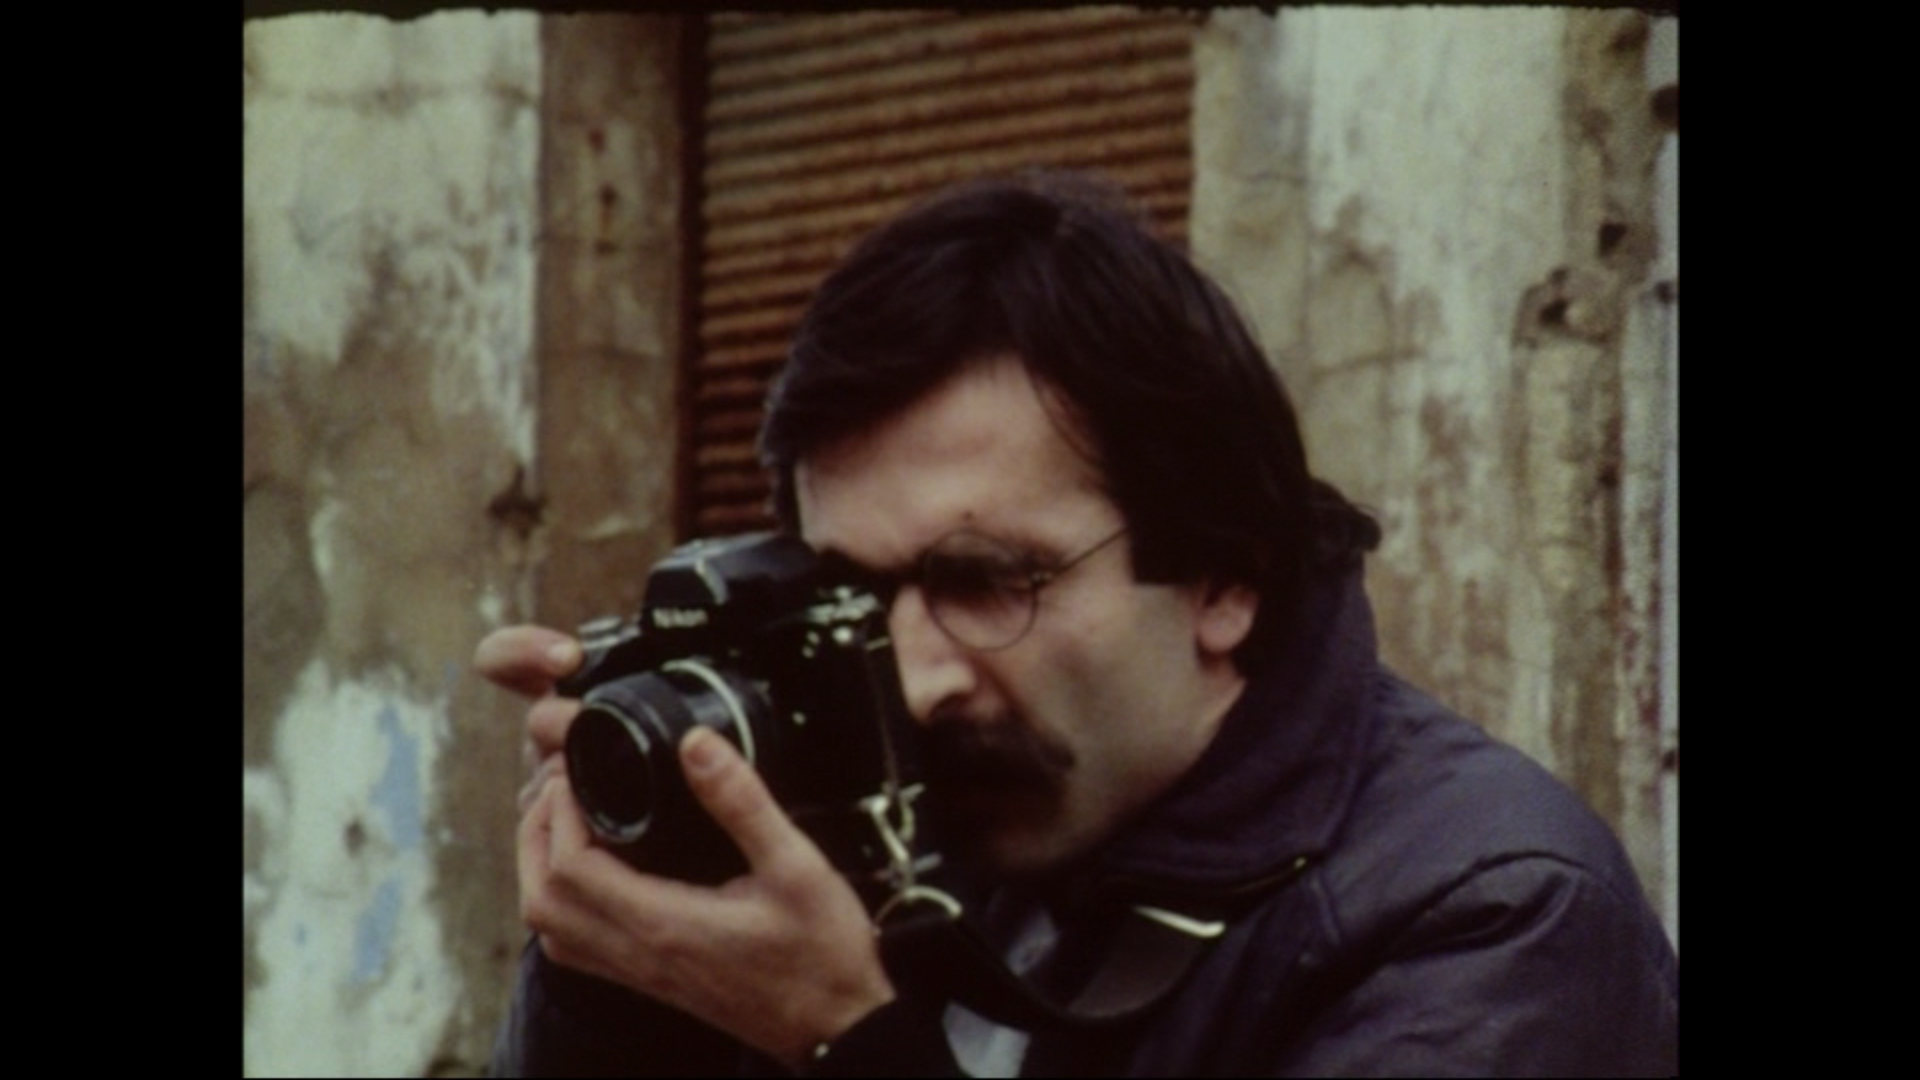 Maroun Baghdadi, Whispers, film still, 1980